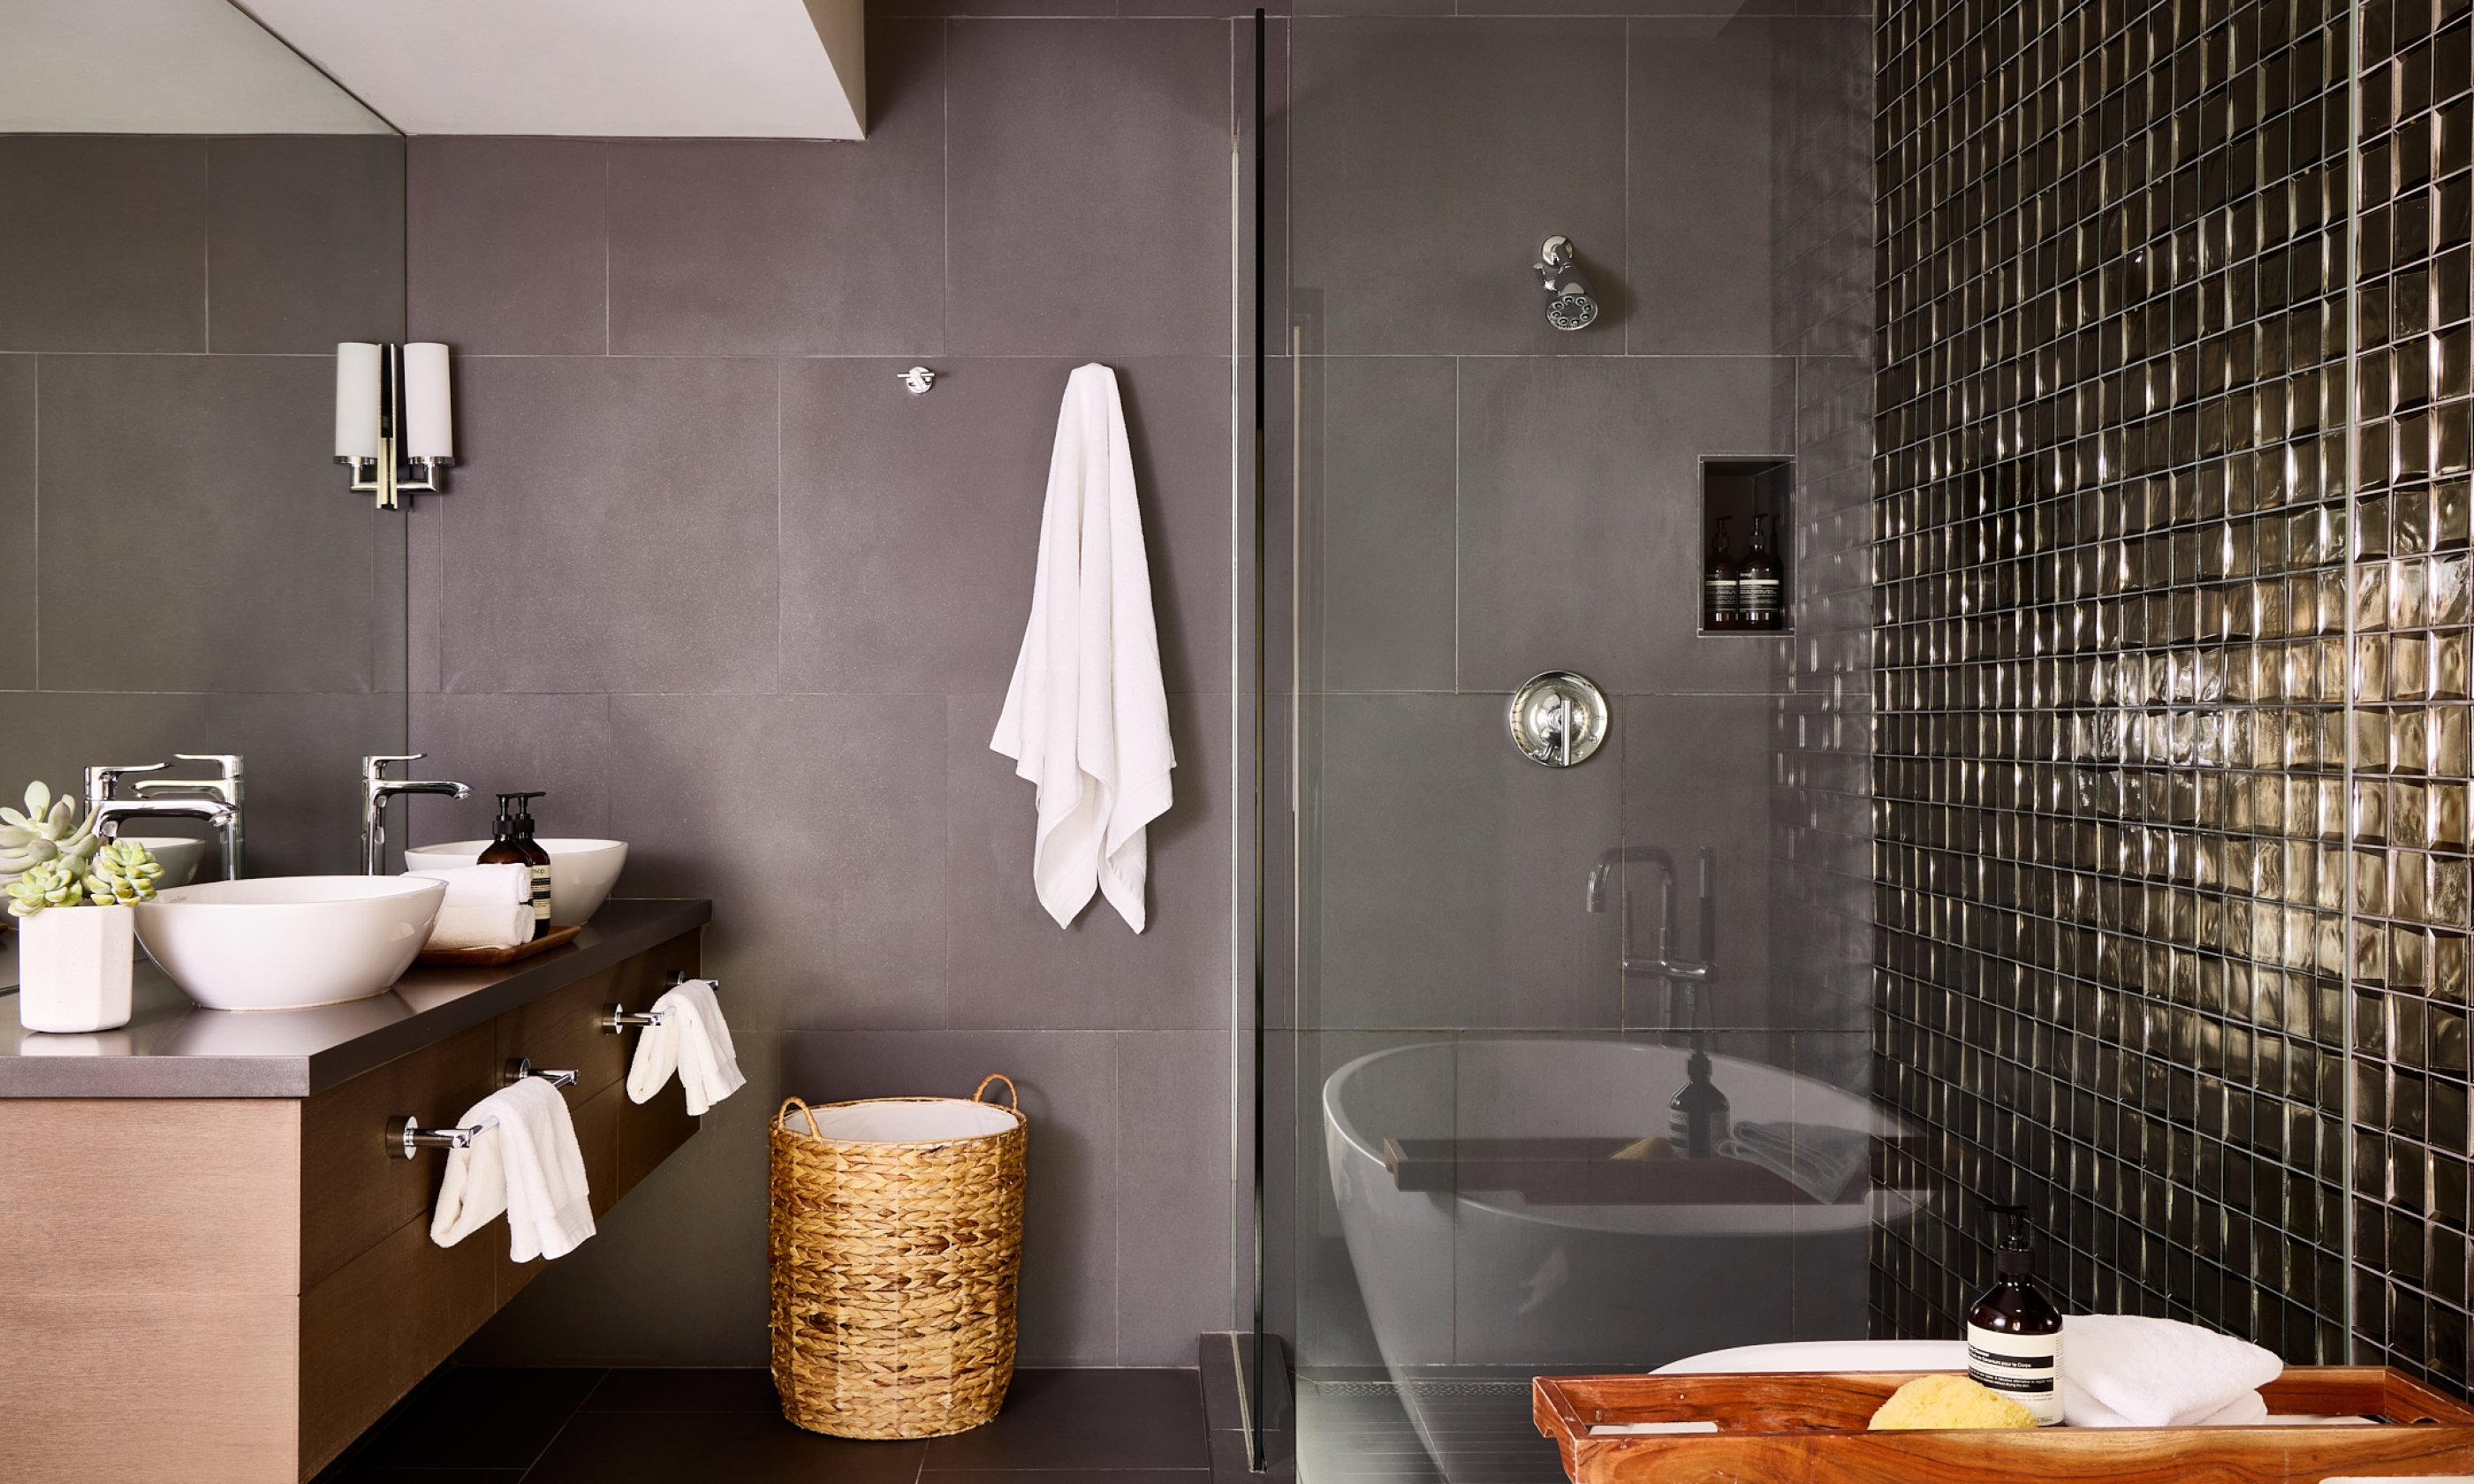 Metallic tiled bathroom with soaking tub, walk-in shower, two sinks and vanity.